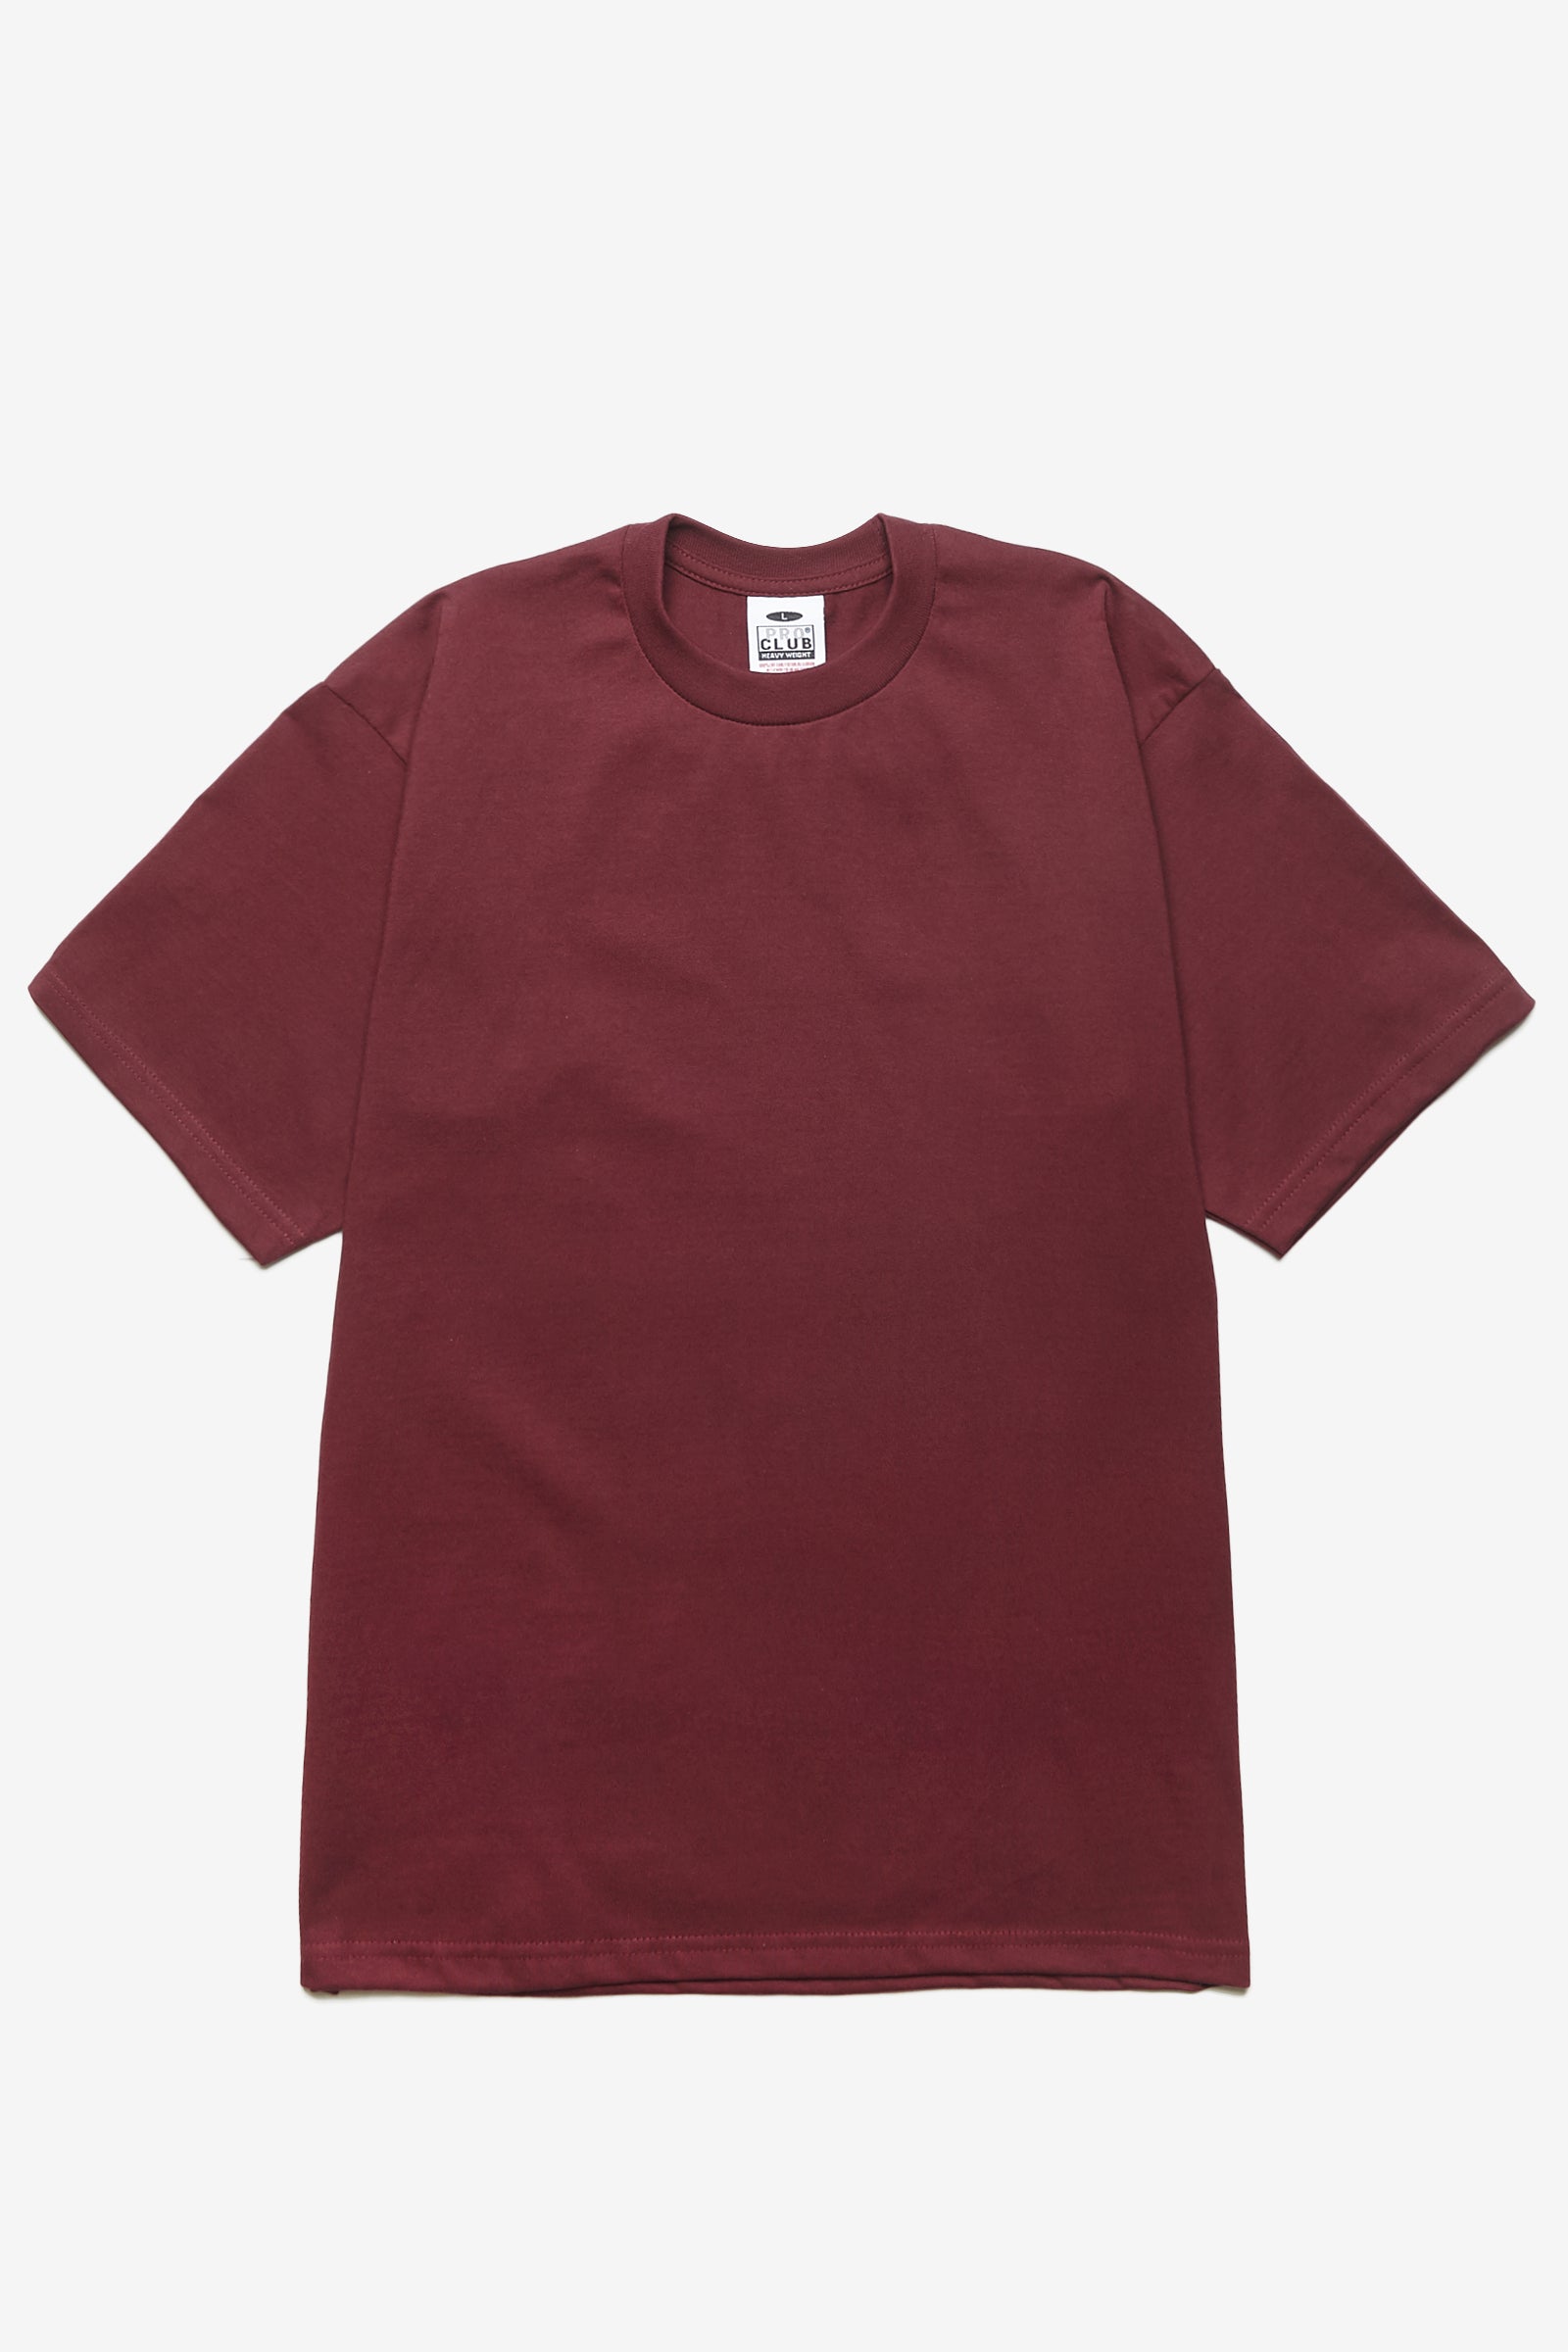 Pro Club - Heavyweight T-Shirt - Maroon | Blacksmith Store